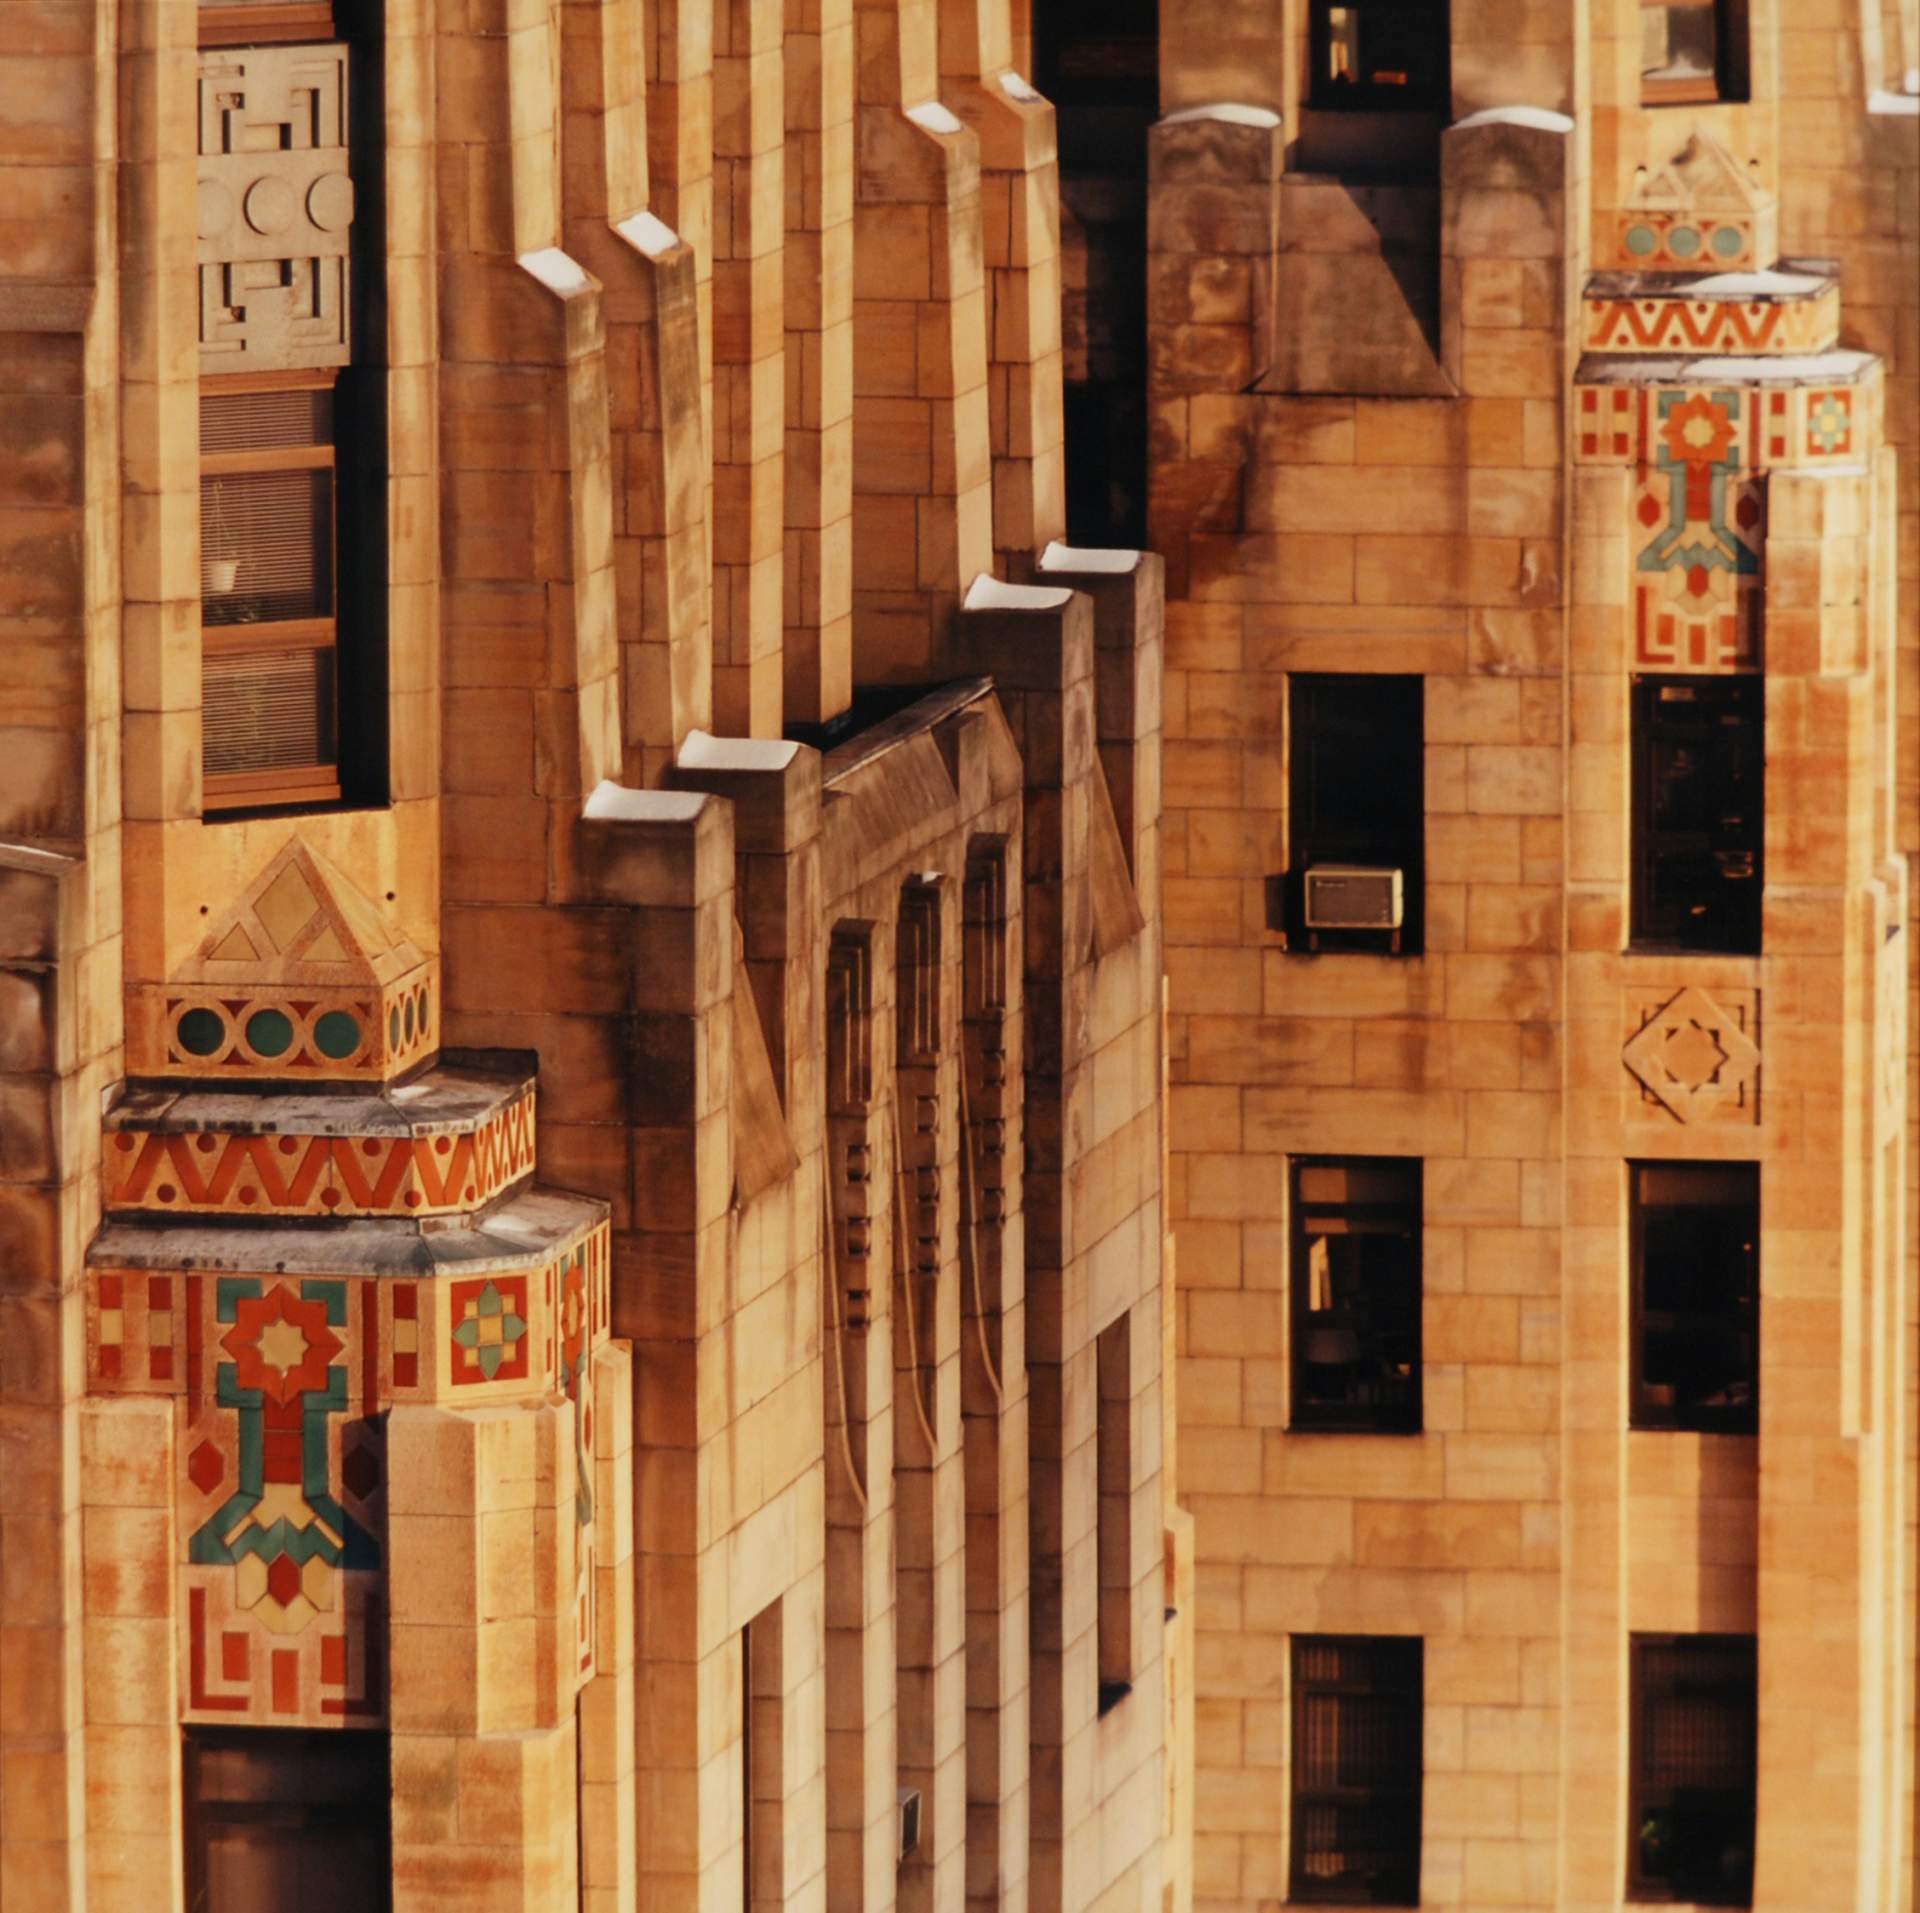 [Buffalo City Hall, upper view showing ornamentation]